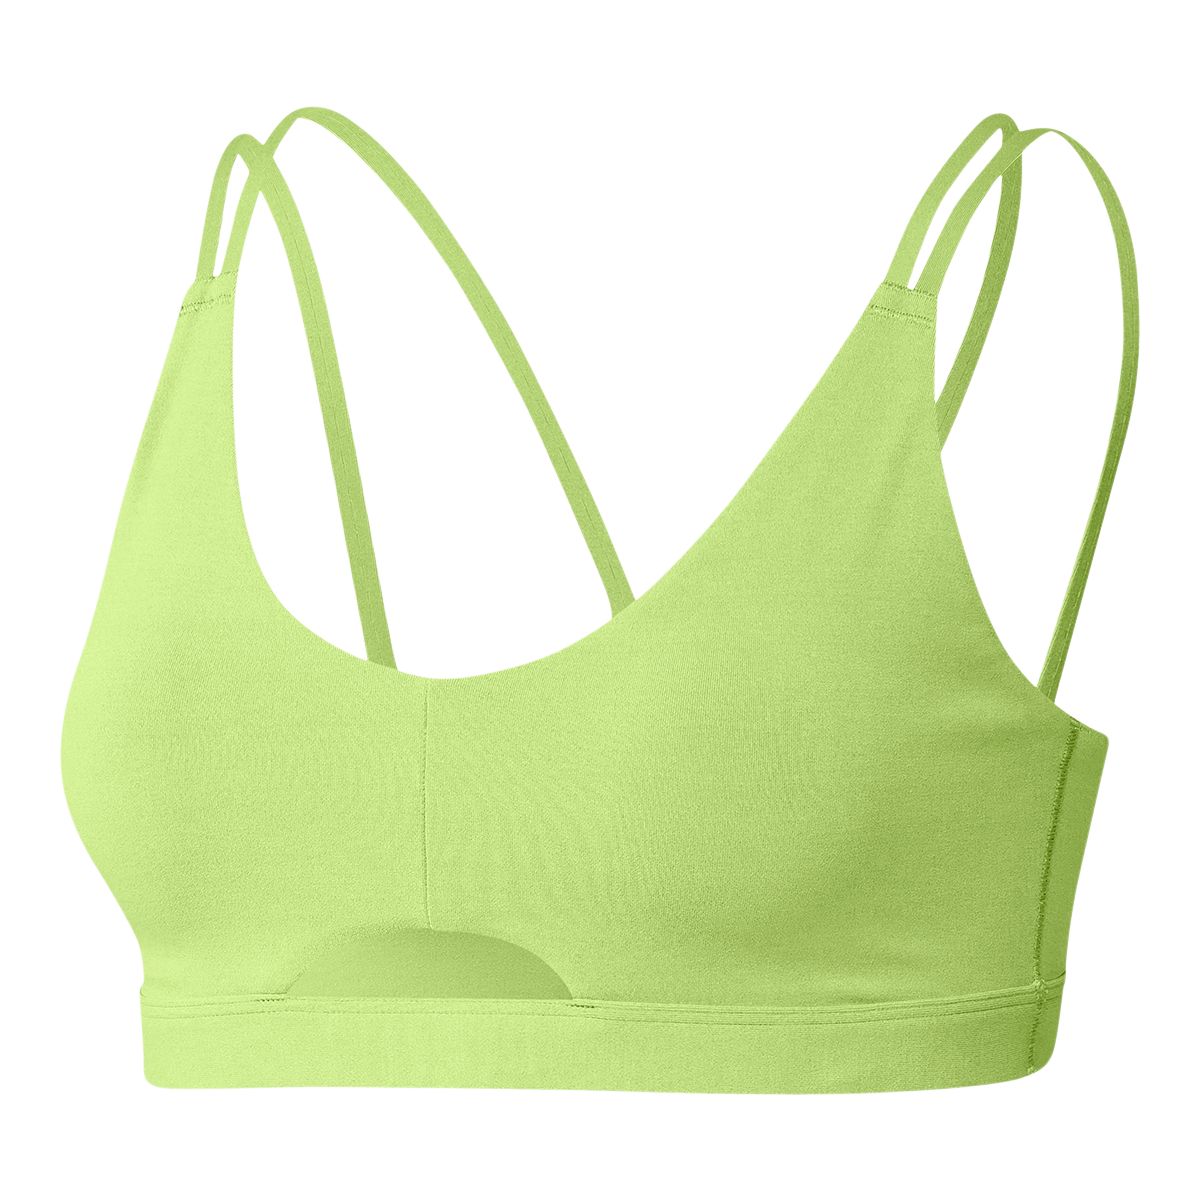 Nike Women's Yoga Luxe Crop Tank Top, Tight Fit, Sleeveless, Dri-FIT,  Sports